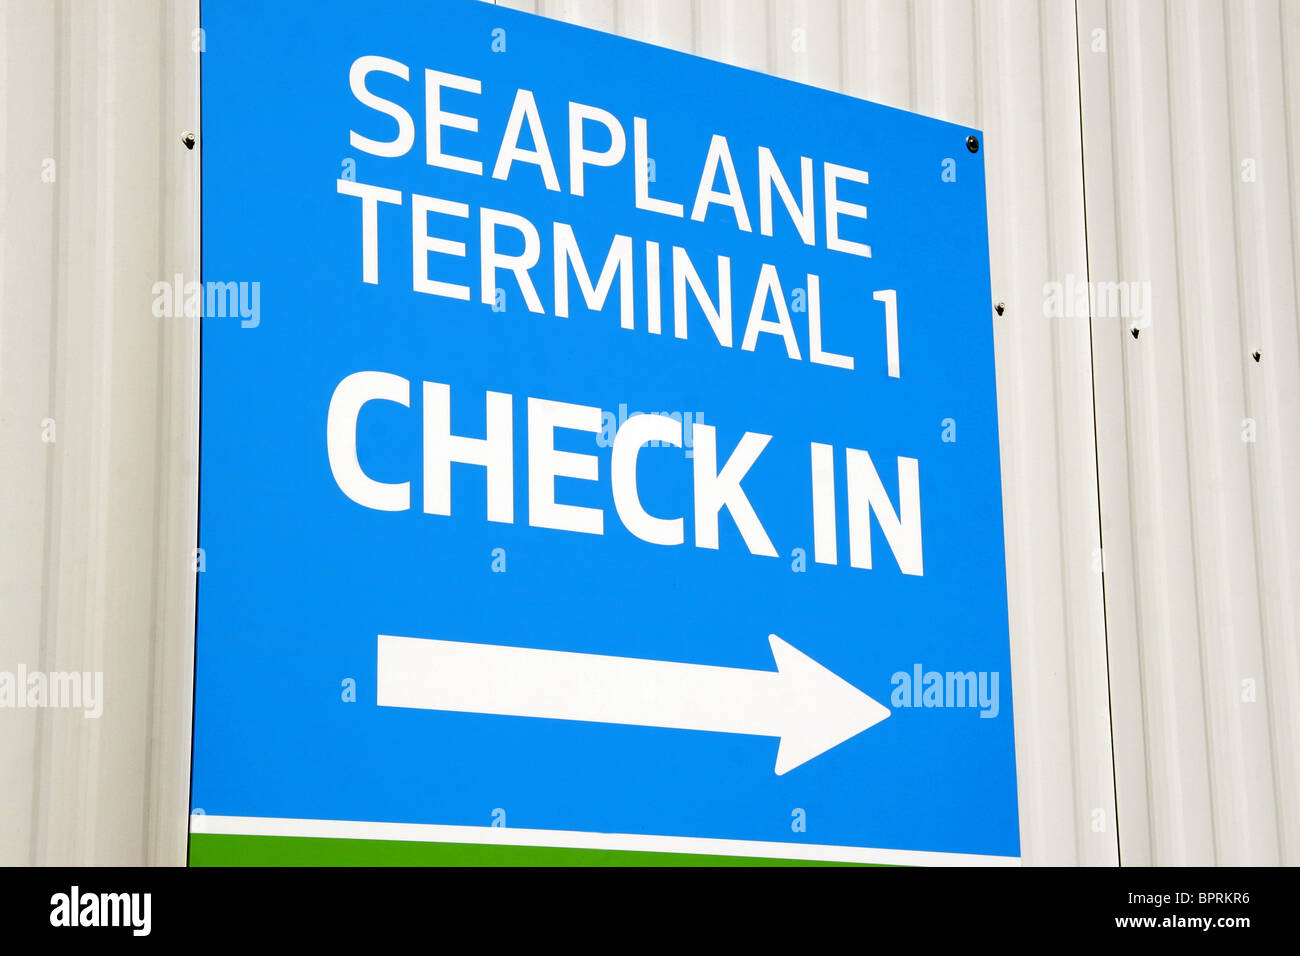 Seaplane Terminal check in sign, Vancouver, British Columbia, Canada Stock Photo